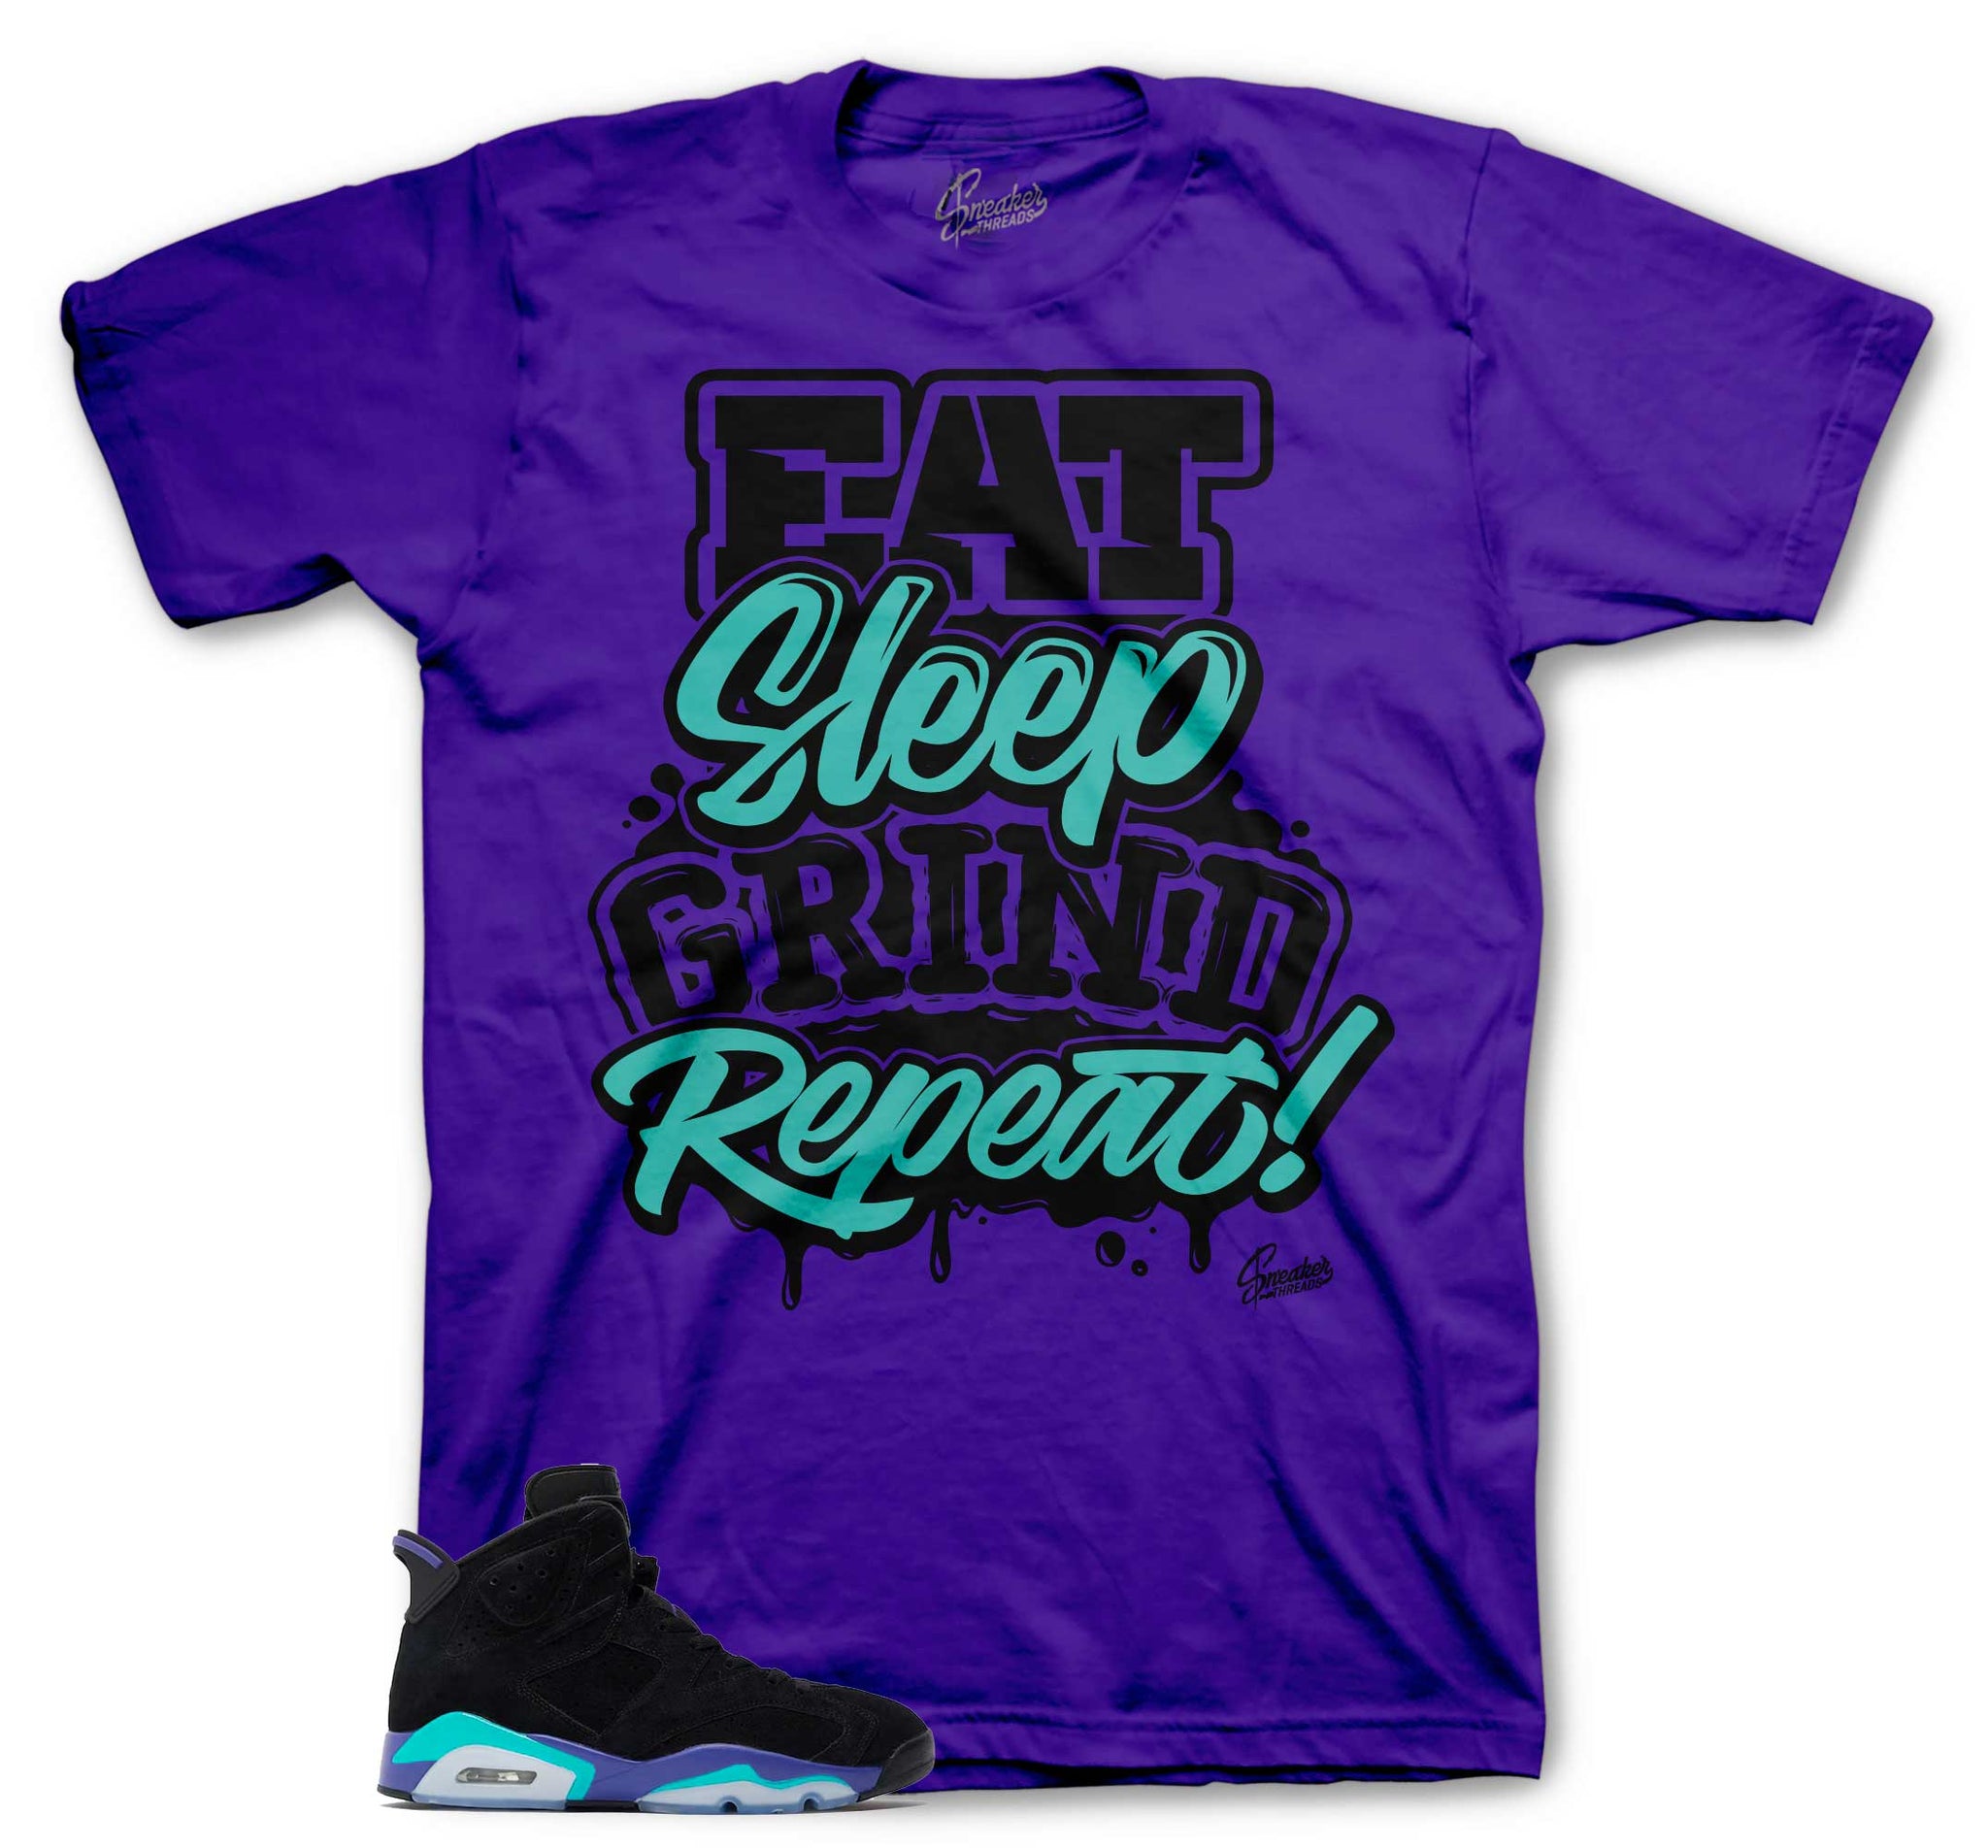 Retro 6 Aqua Shirt - Daily Routine - Purple